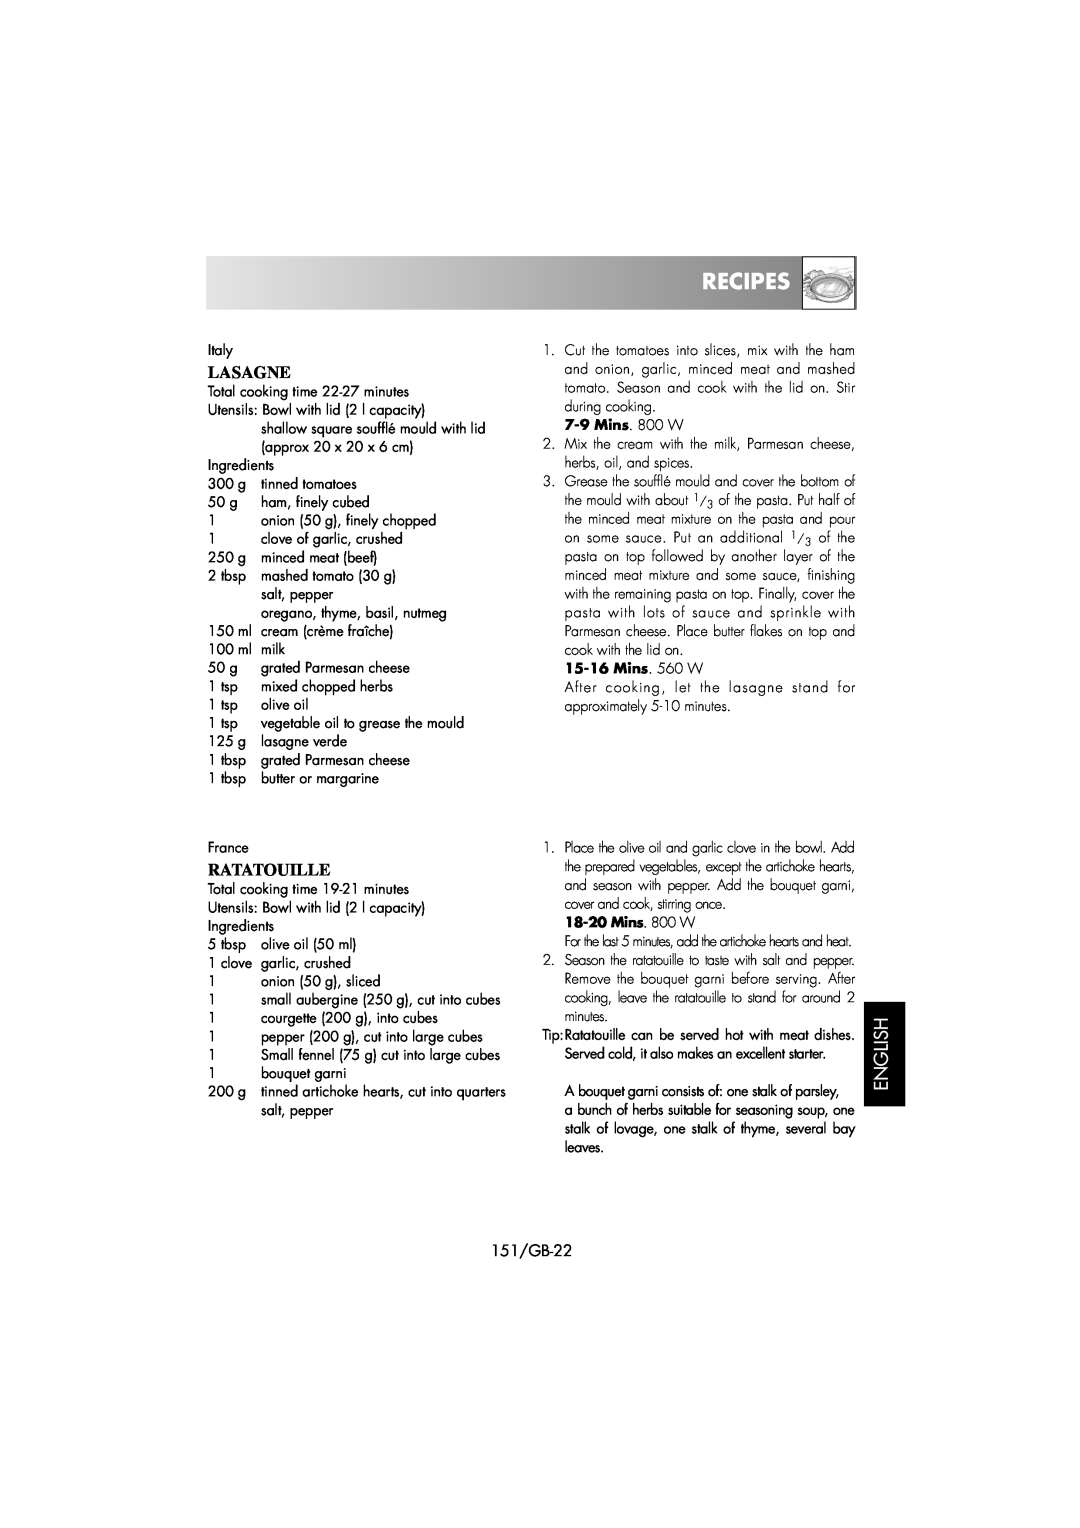 Sharp R-239 operation manual Lasagne, Ratatouille, Recipes, English, 151/GB-22 